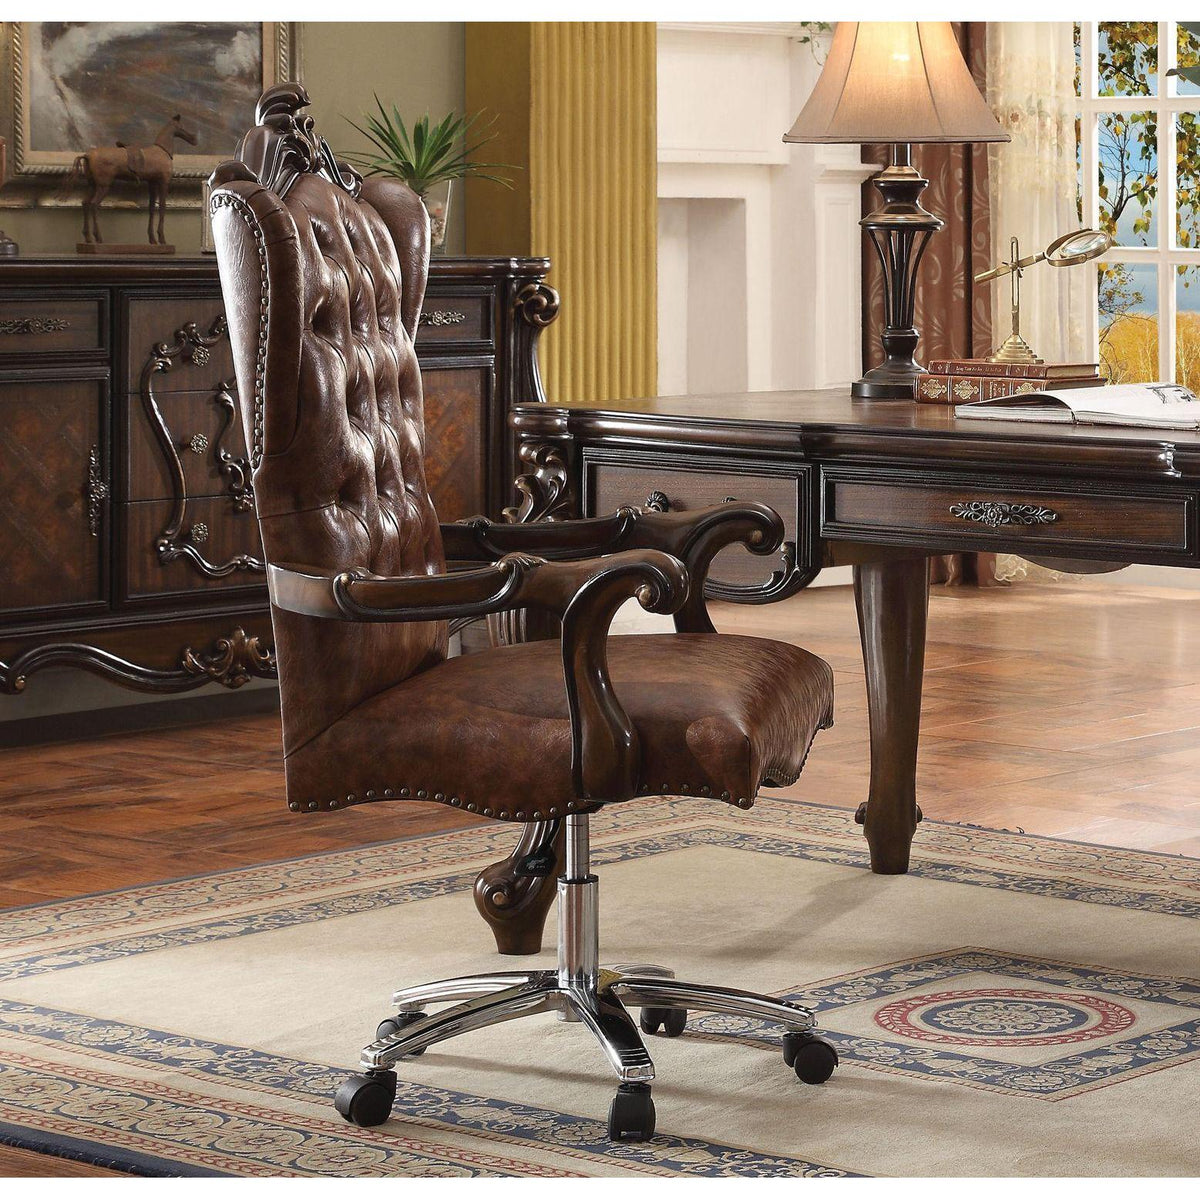 Acme Furniture Versailles 92282 Executive Office Chair - Light Brown PU & Cherry Oak